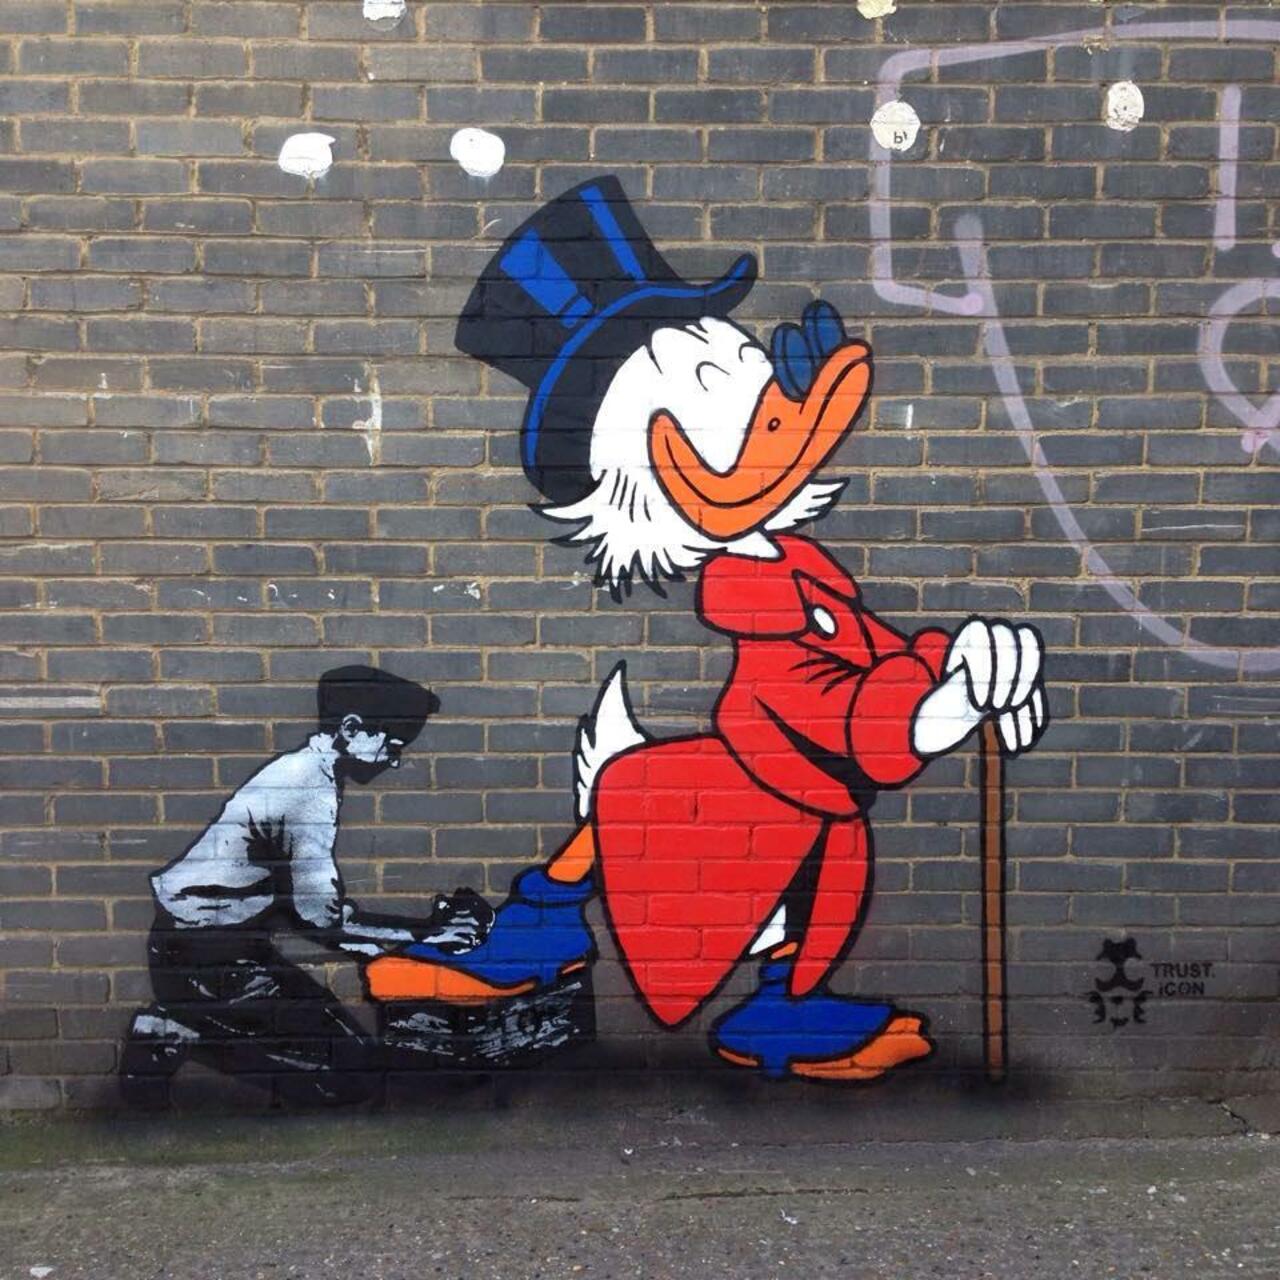 'Shine Box' 
New Street Art by iCON in Bethnal Green, London 

#art #arte #graffiti #streetart http://t.co/mvhilopNMz